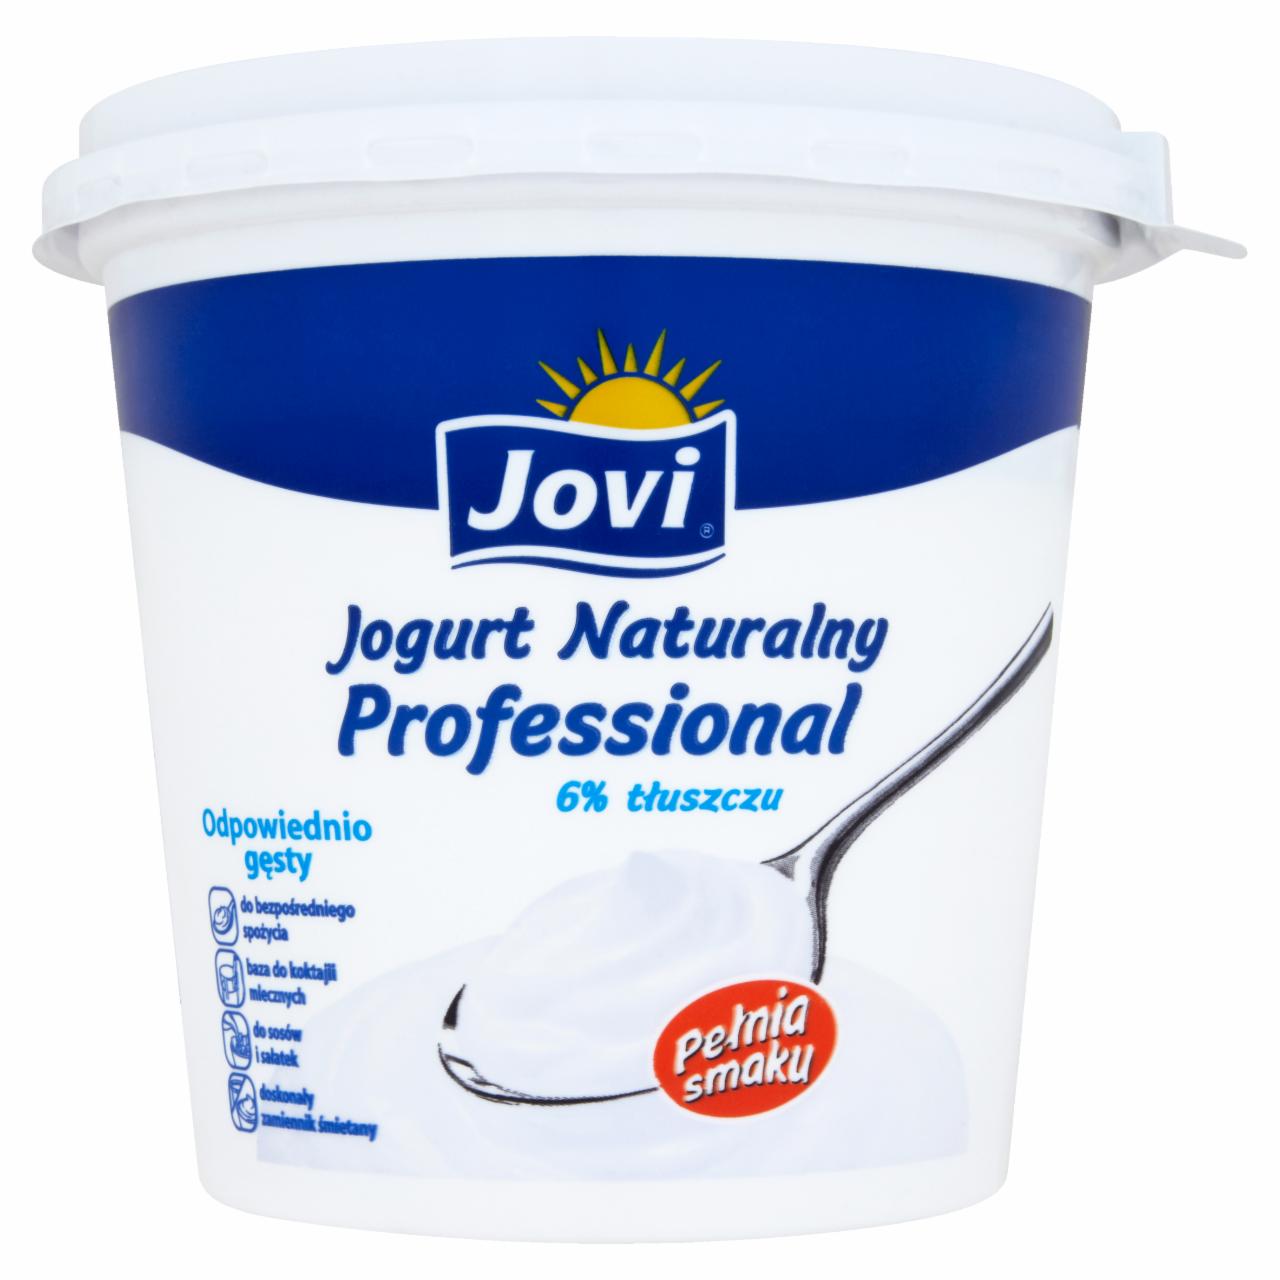 Zdjęcia - Jovi Professional Jogurt naturalny 1 kg